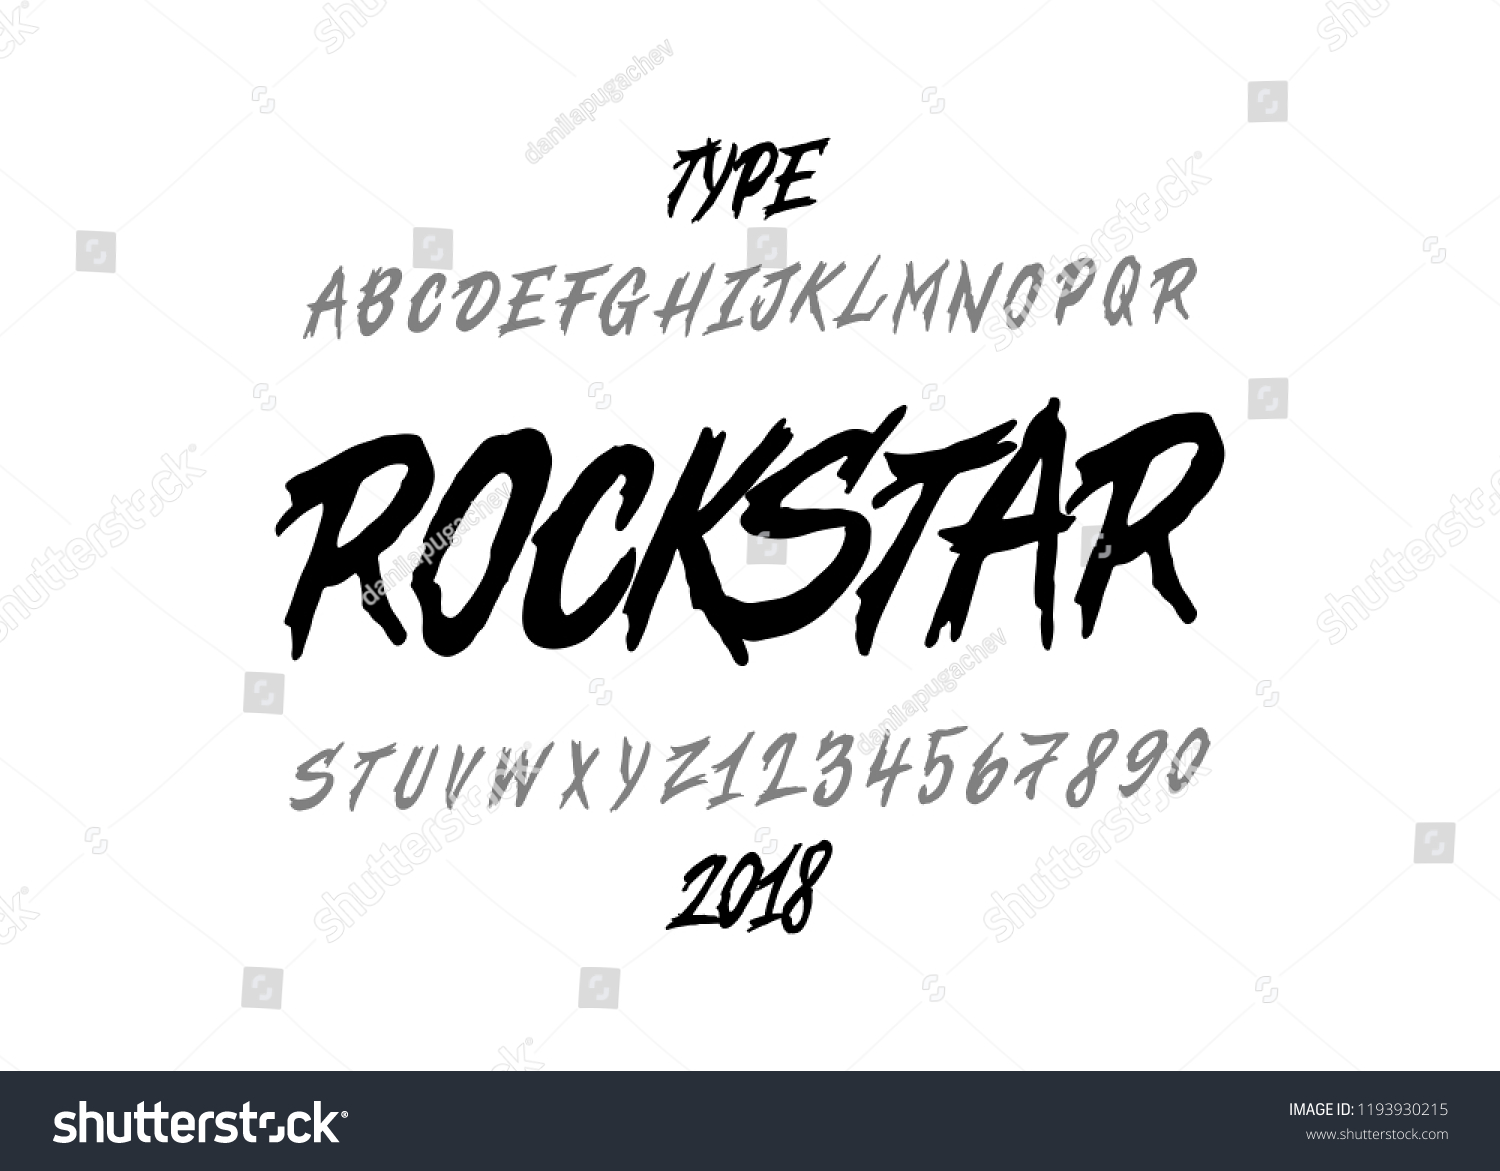 Rockstar Font Brush Type Face Vector Stock Vector (Royalty Free ...